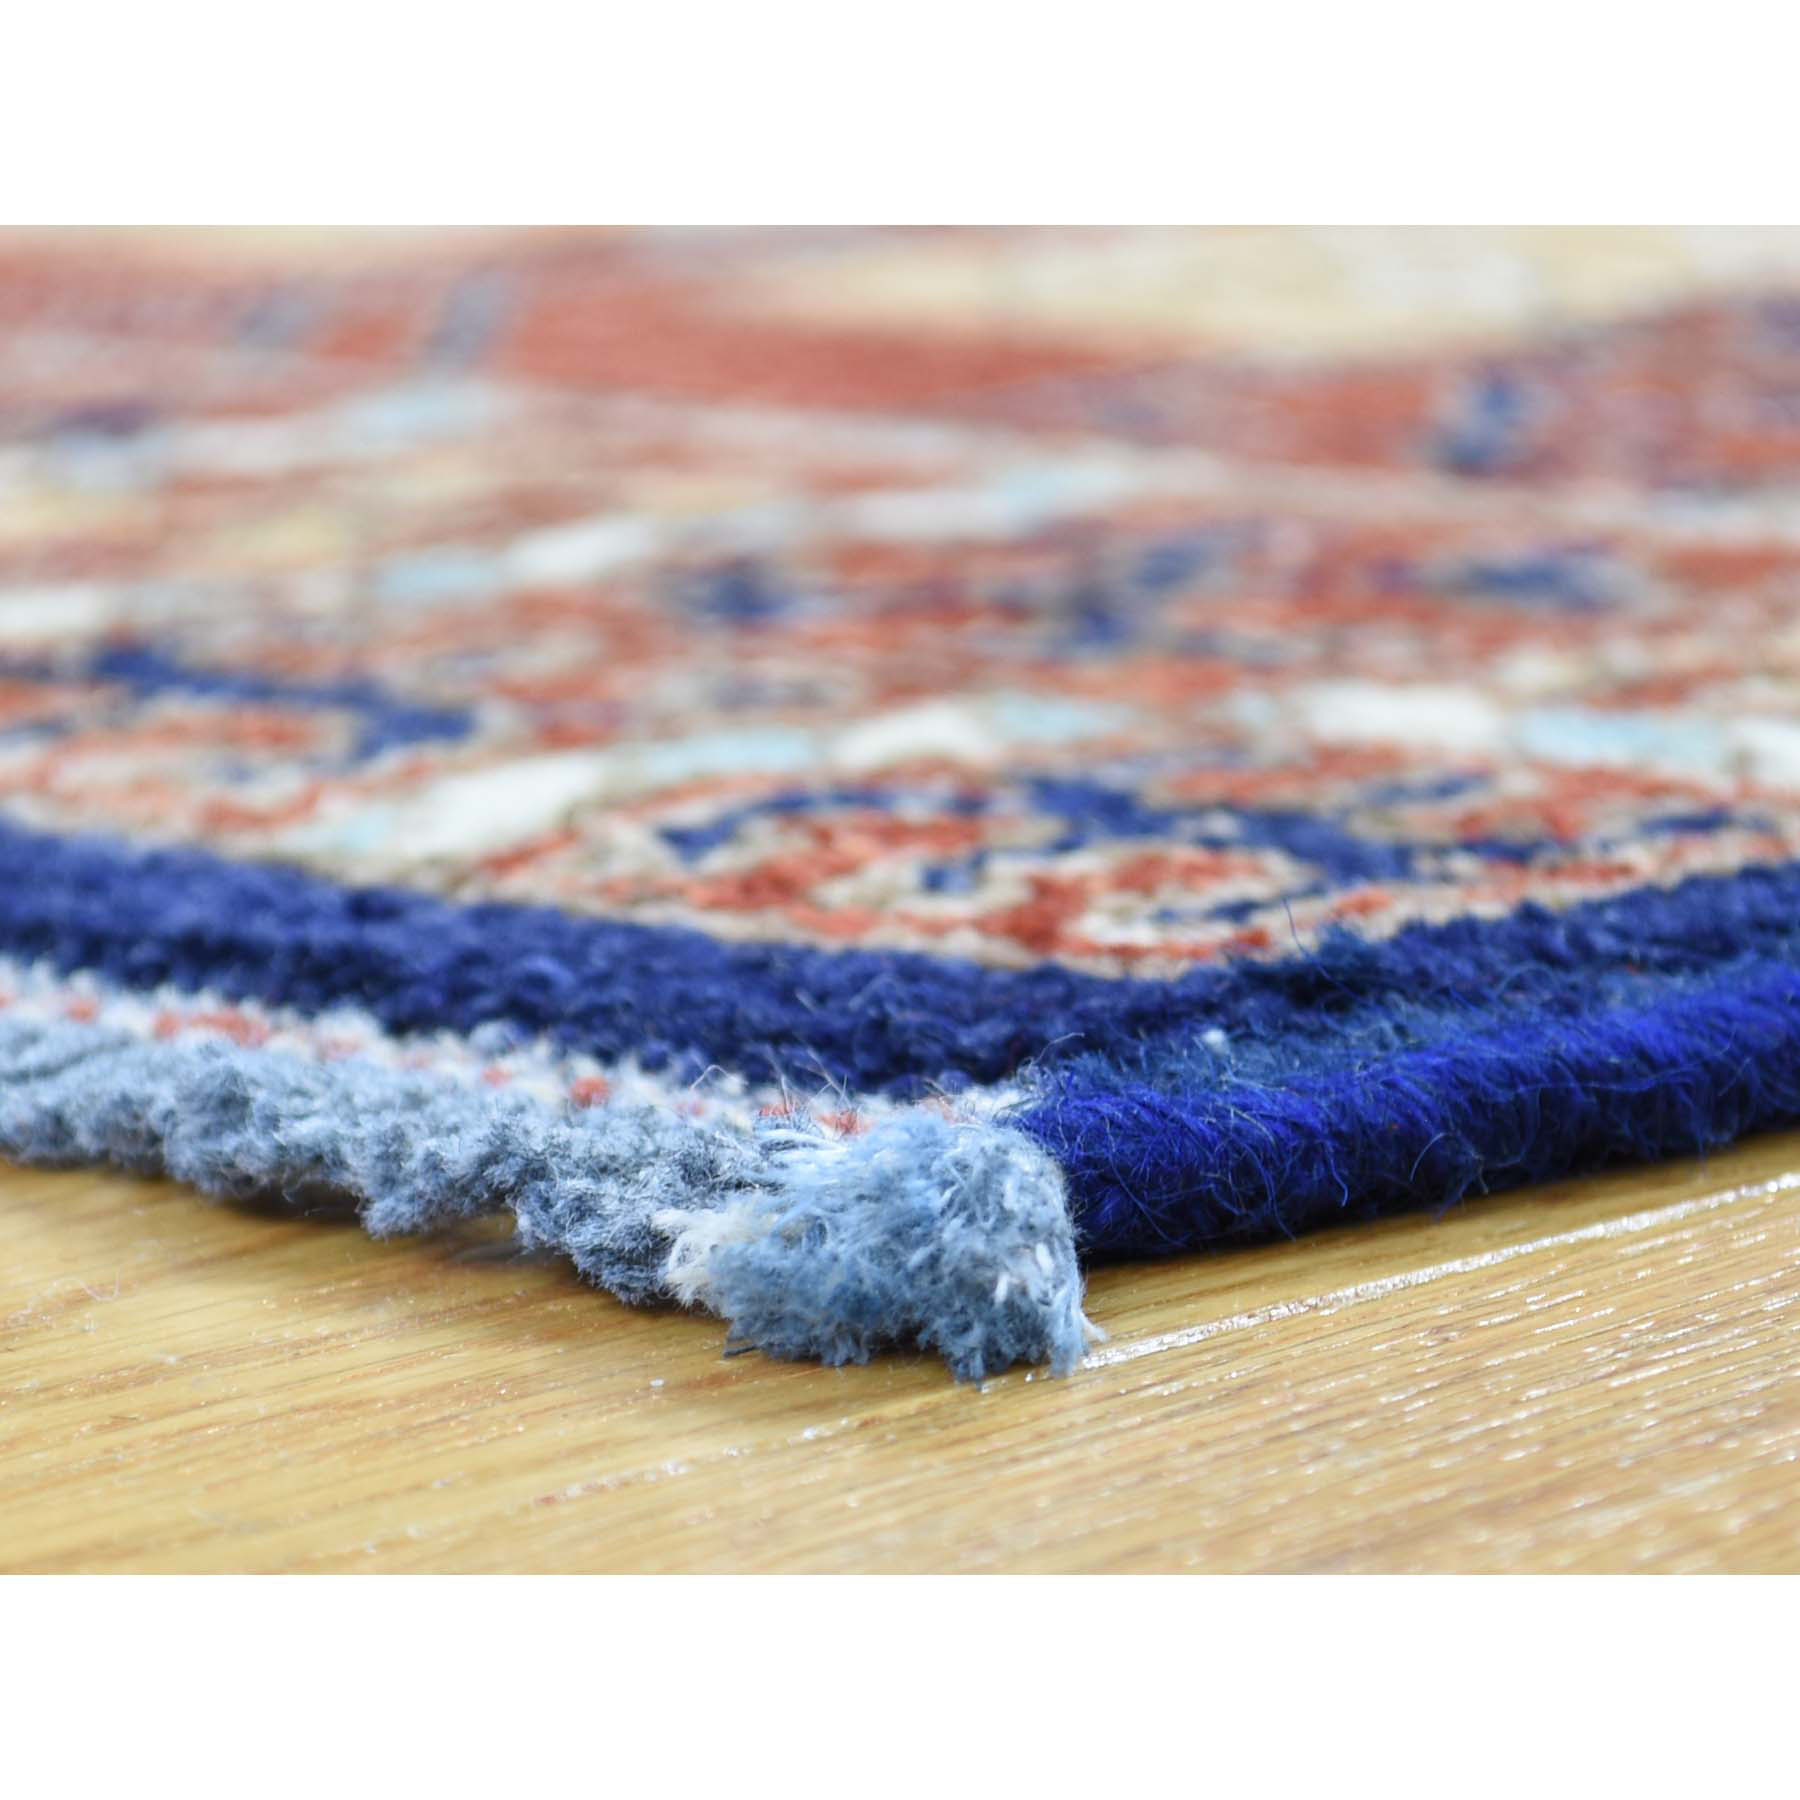 2-x3-2  100 Percent Wool Afghan Ersari Hand-Knotted Prayer Design Rug 